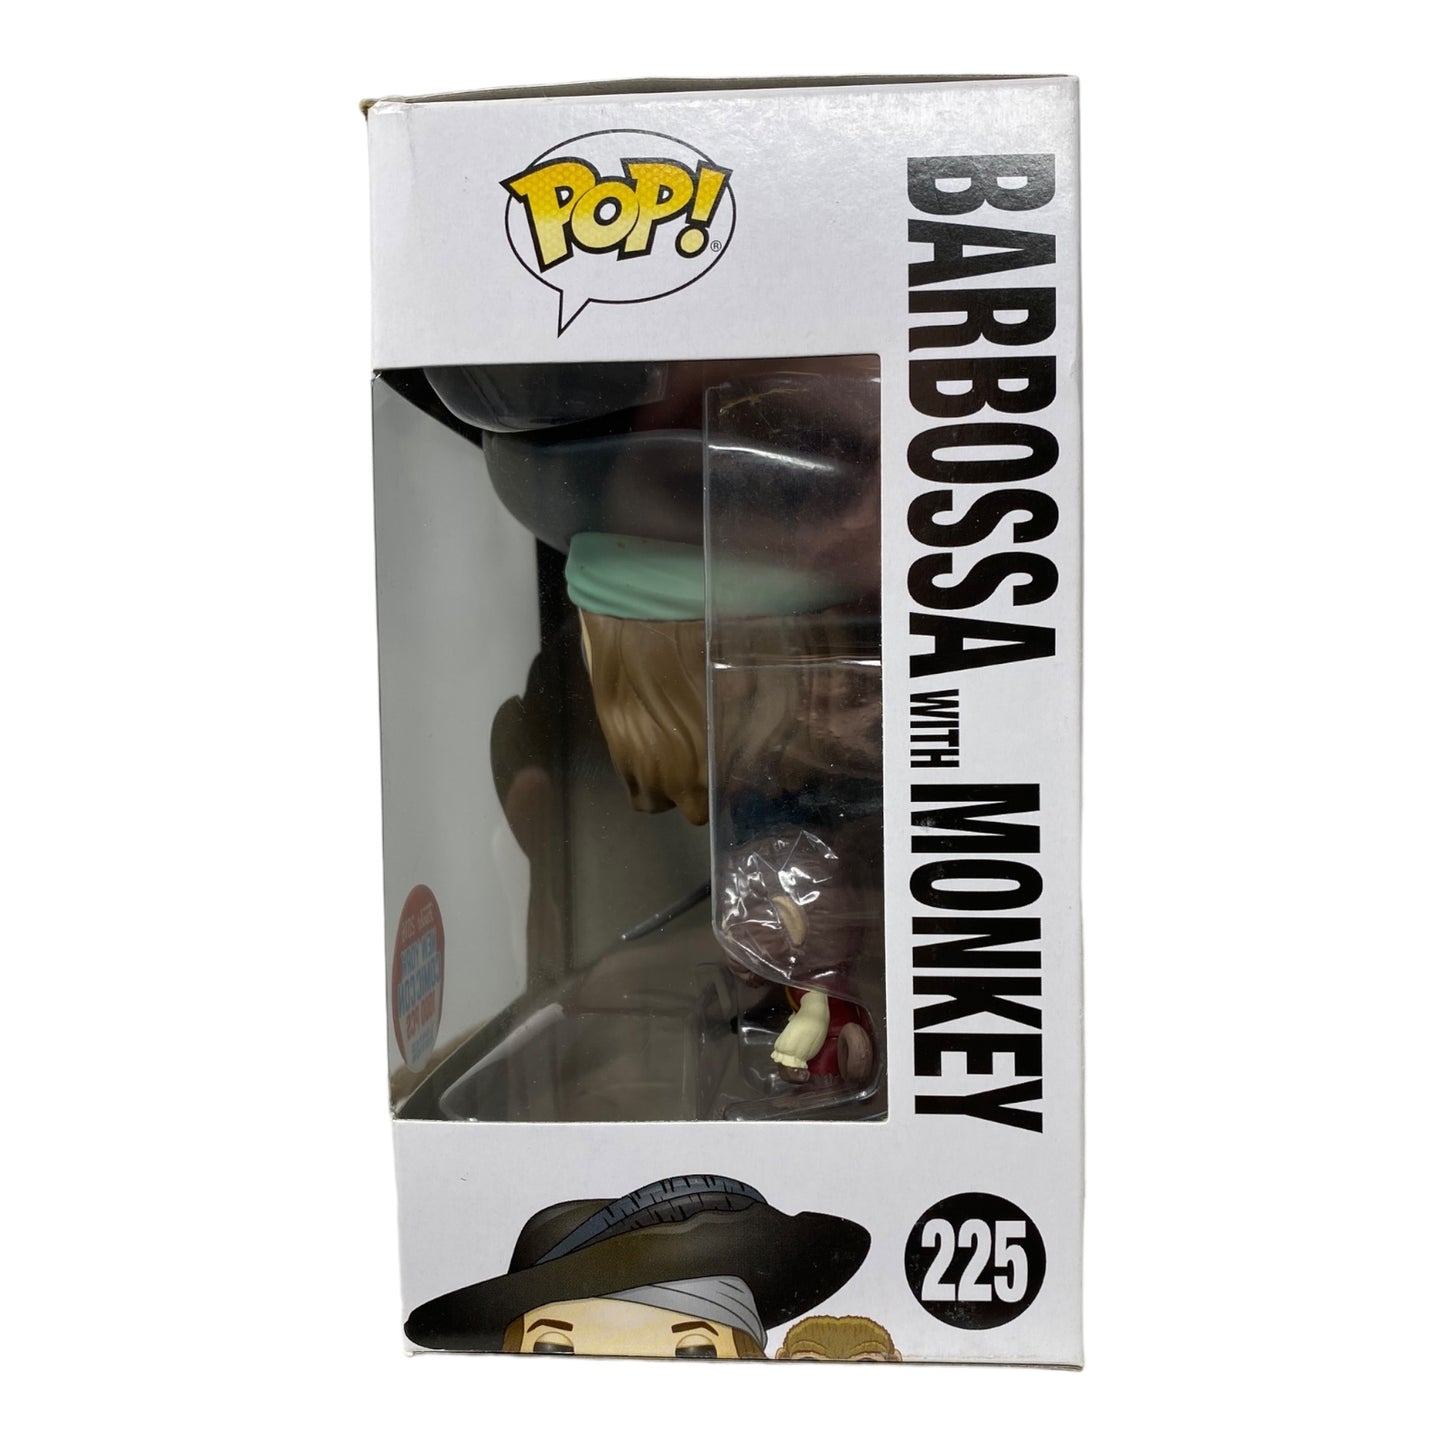 2016 - Barbossa with Monkey 225, NYCC, 1000 pcs